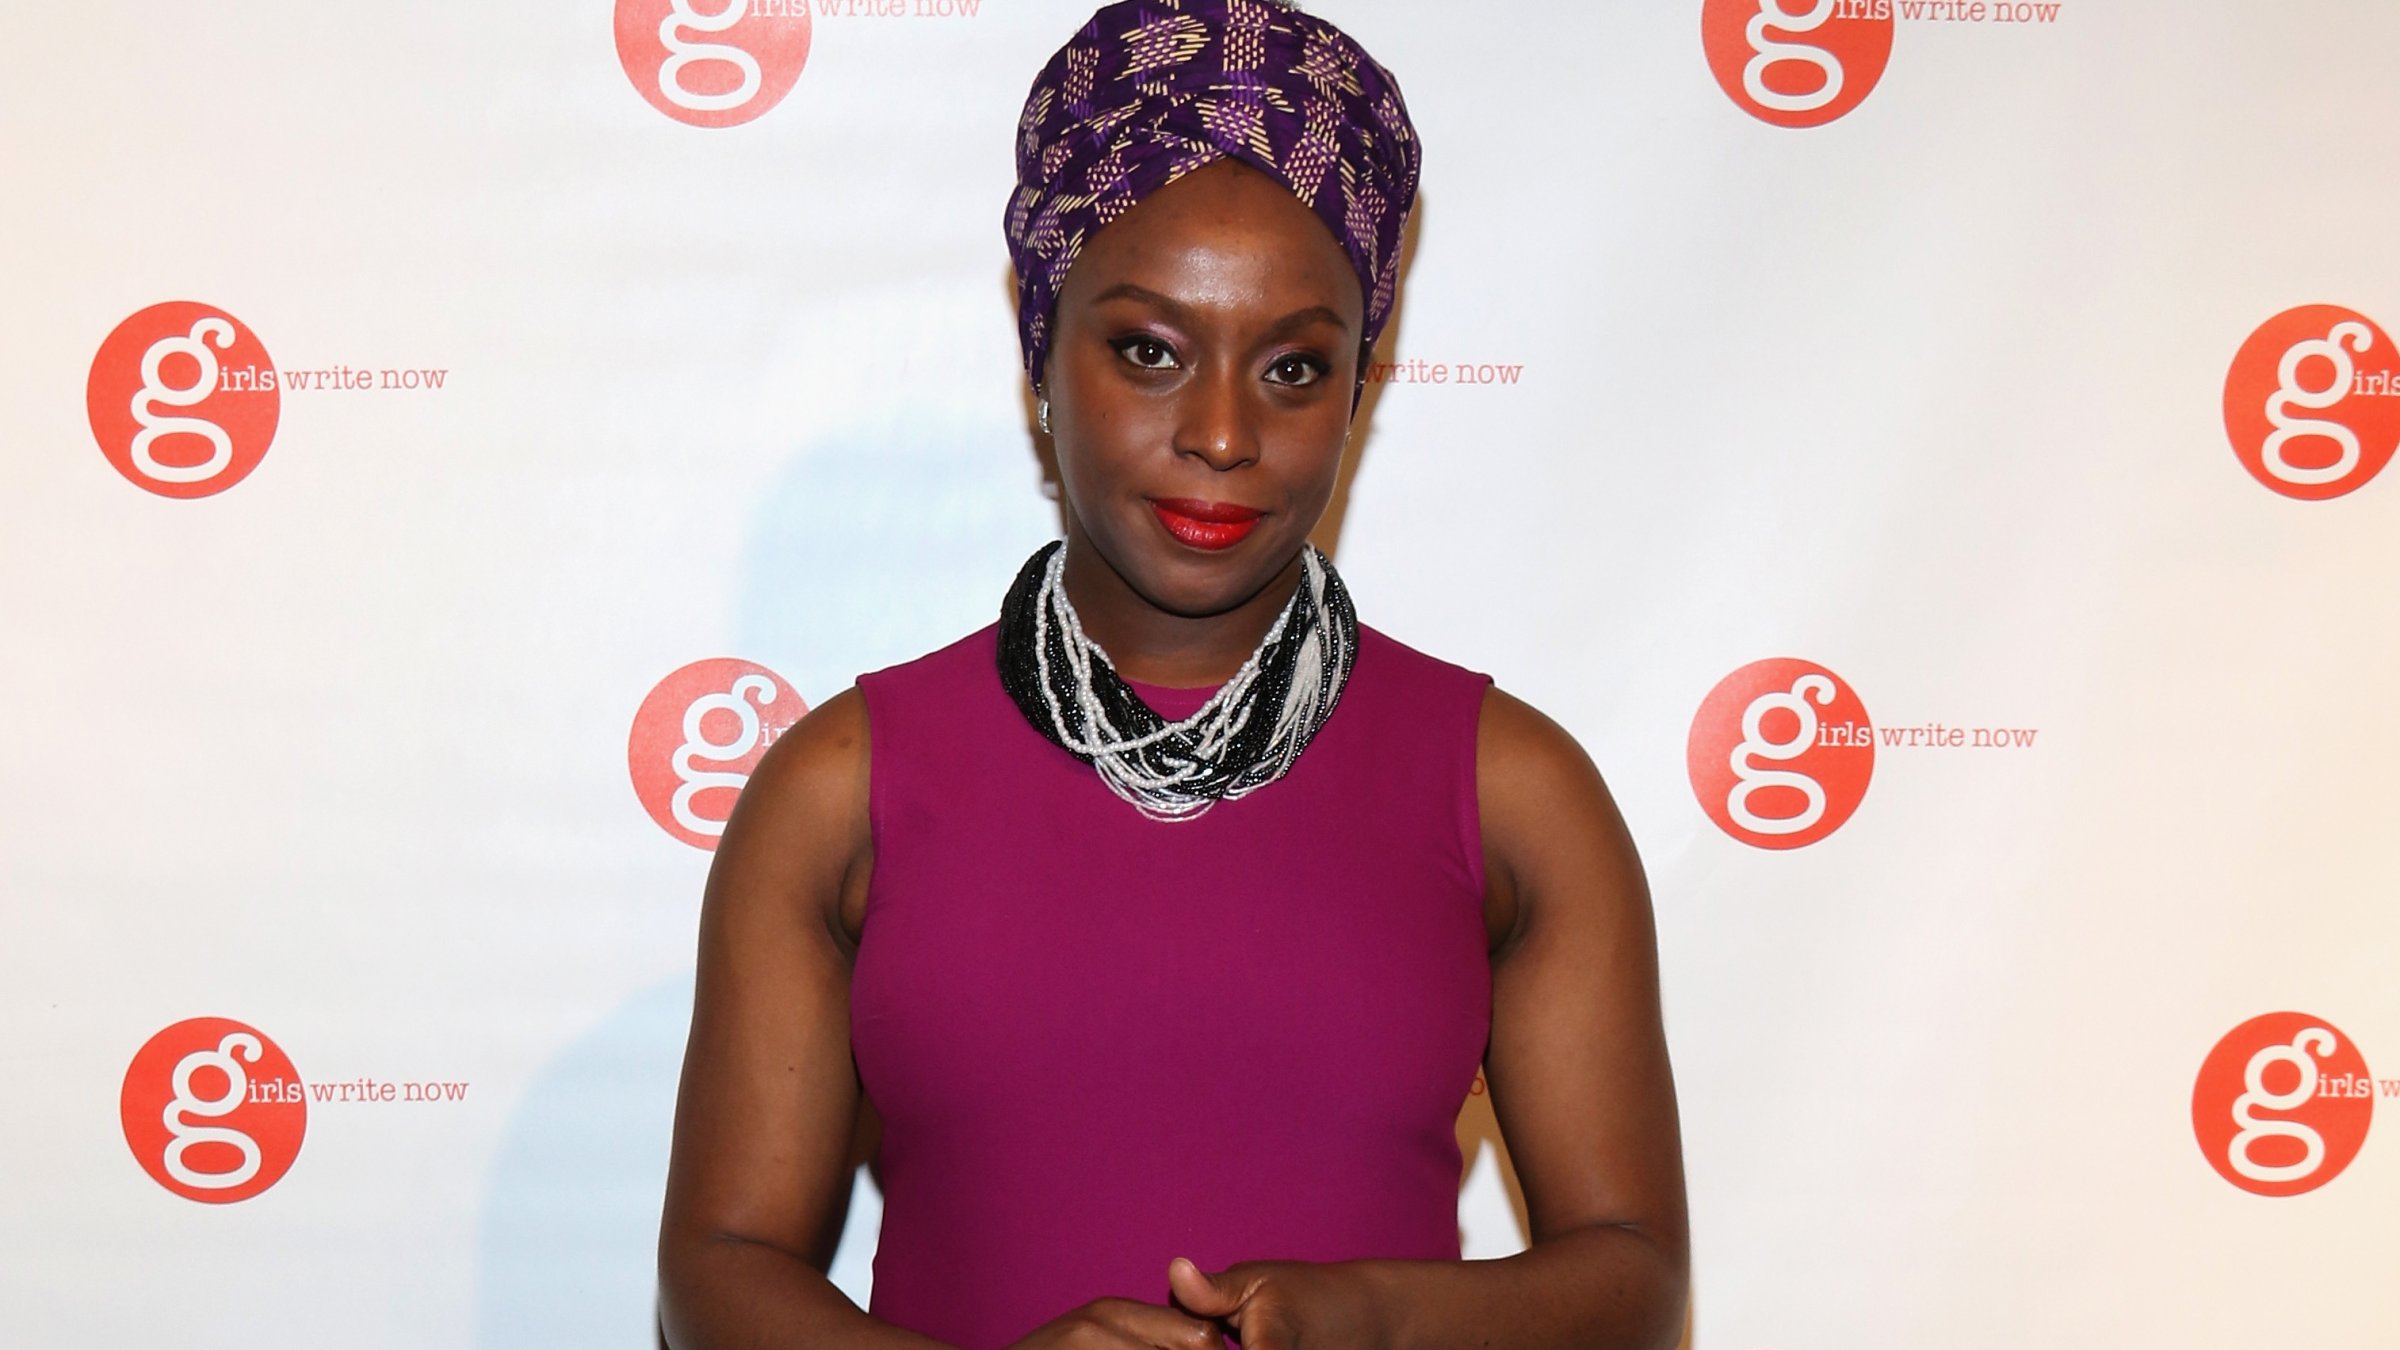 Author Chimamanda Ngozi Adichie attends the Girls Write Now Awards honoring Chimamanda Ngozi Adichie, Pamela Paul and Juju Chang at Tribeca 360 on May 19, 2015 in New York City.